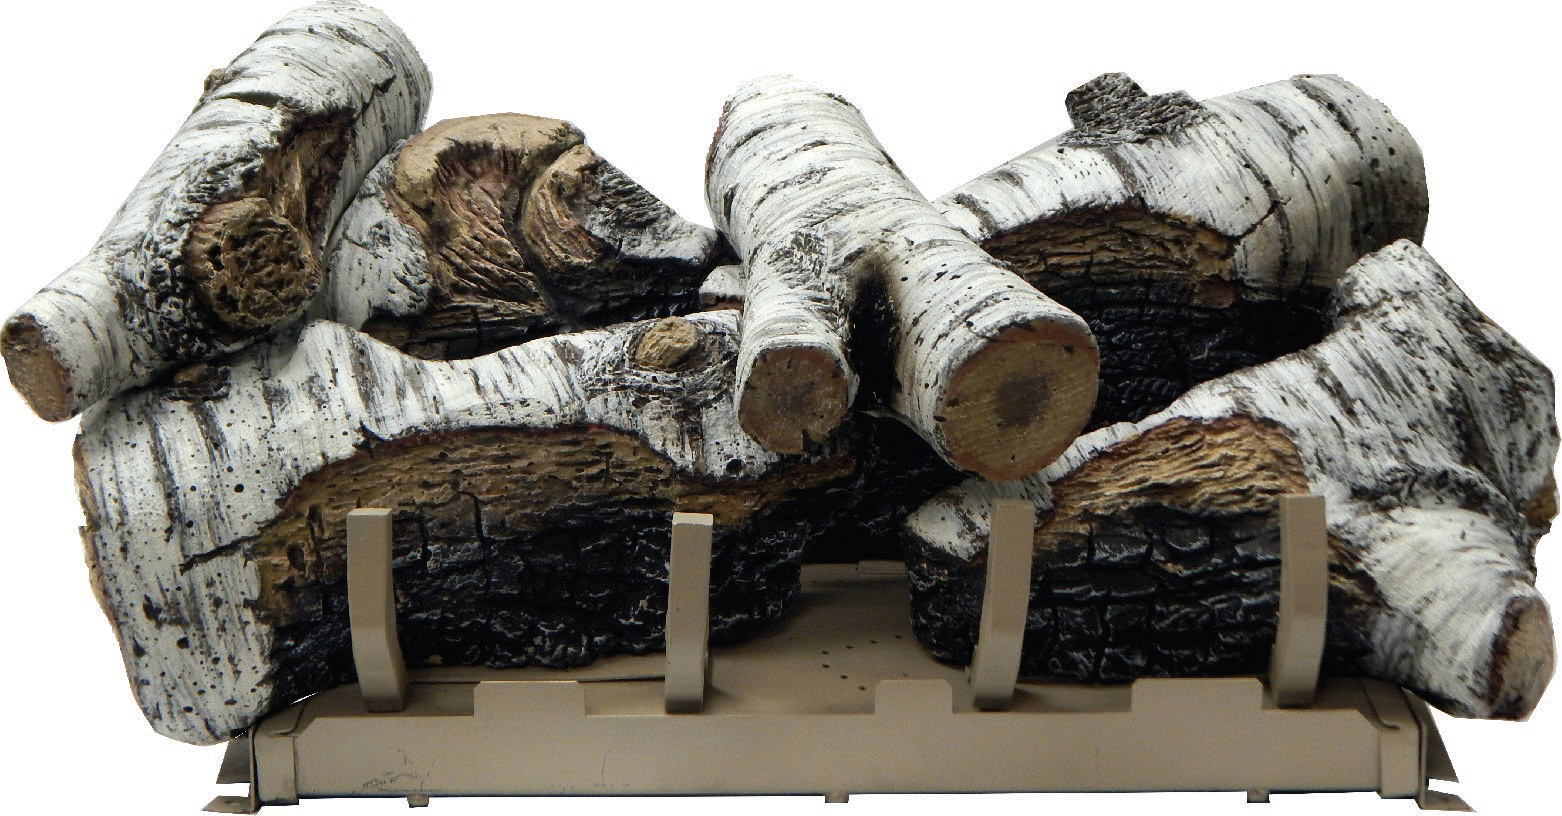 Rasmussen White Birch Fire Pit Log Set, 20-Inches (FP20WB)